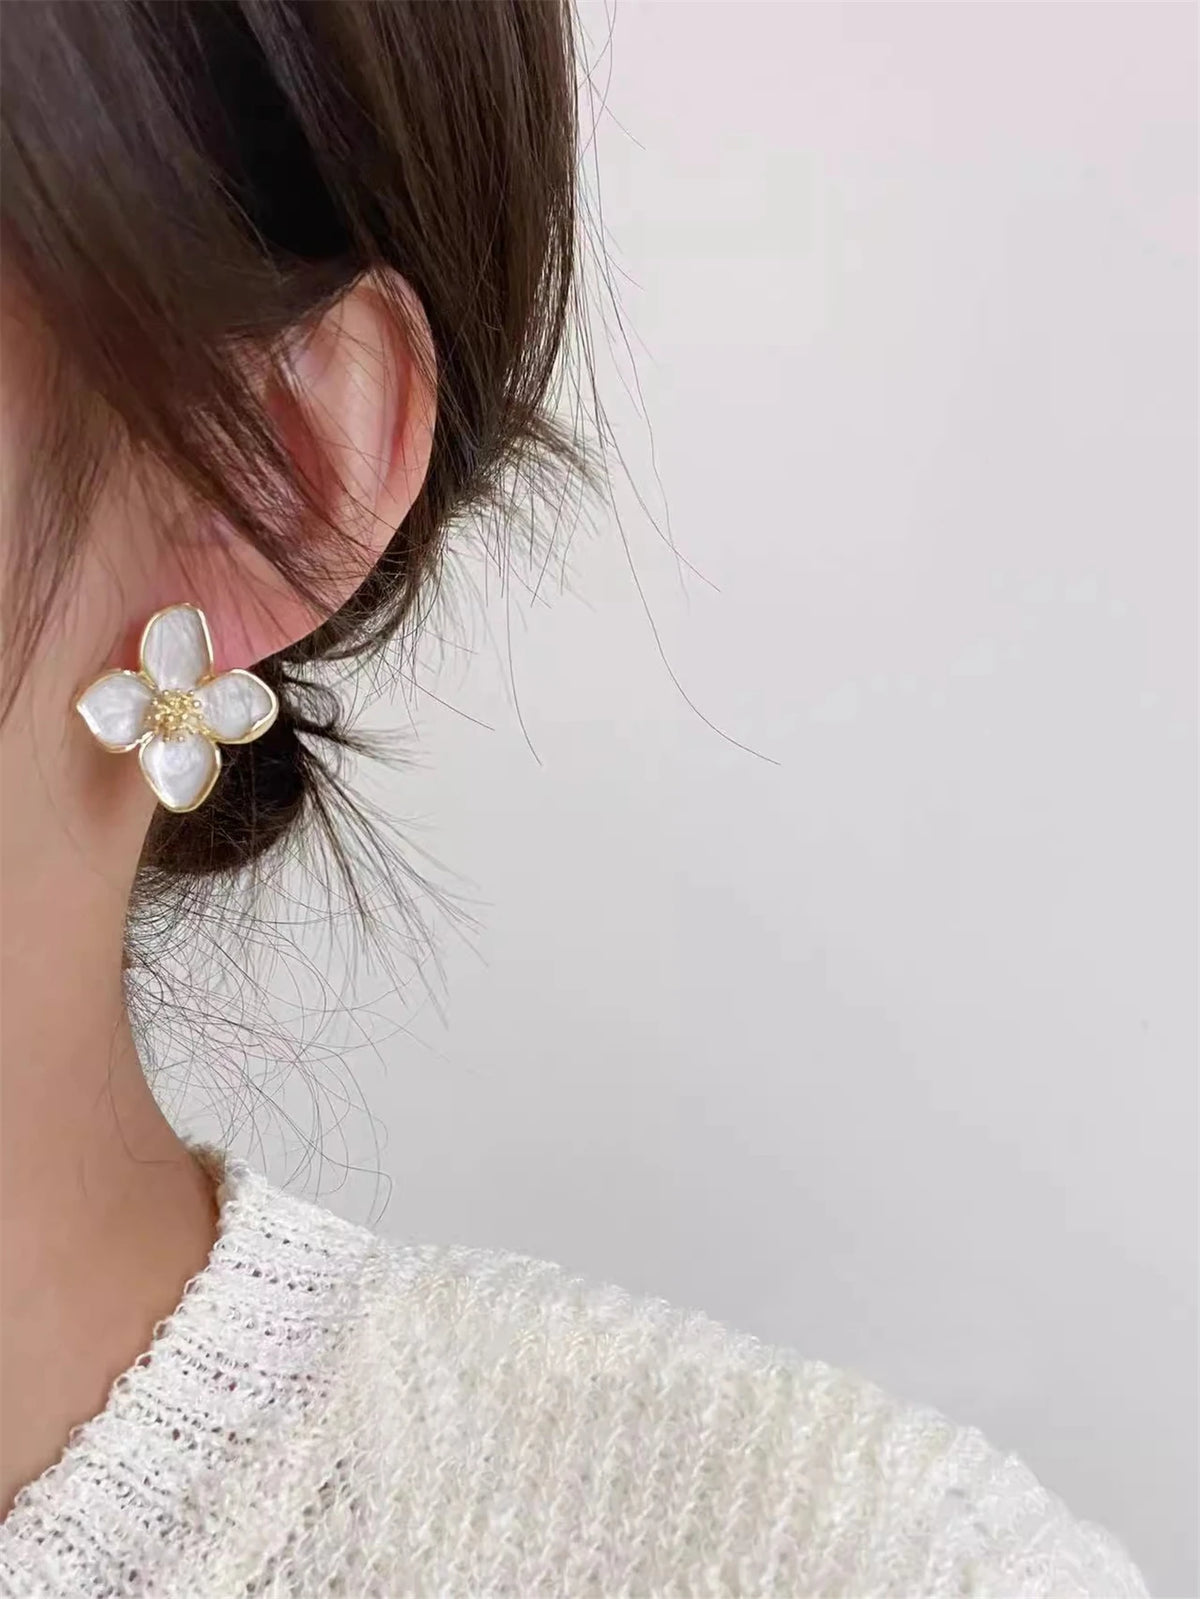 Dangle Enamel Hibiscus Flower Earrings - Korean Romantic French Vintage Fashion